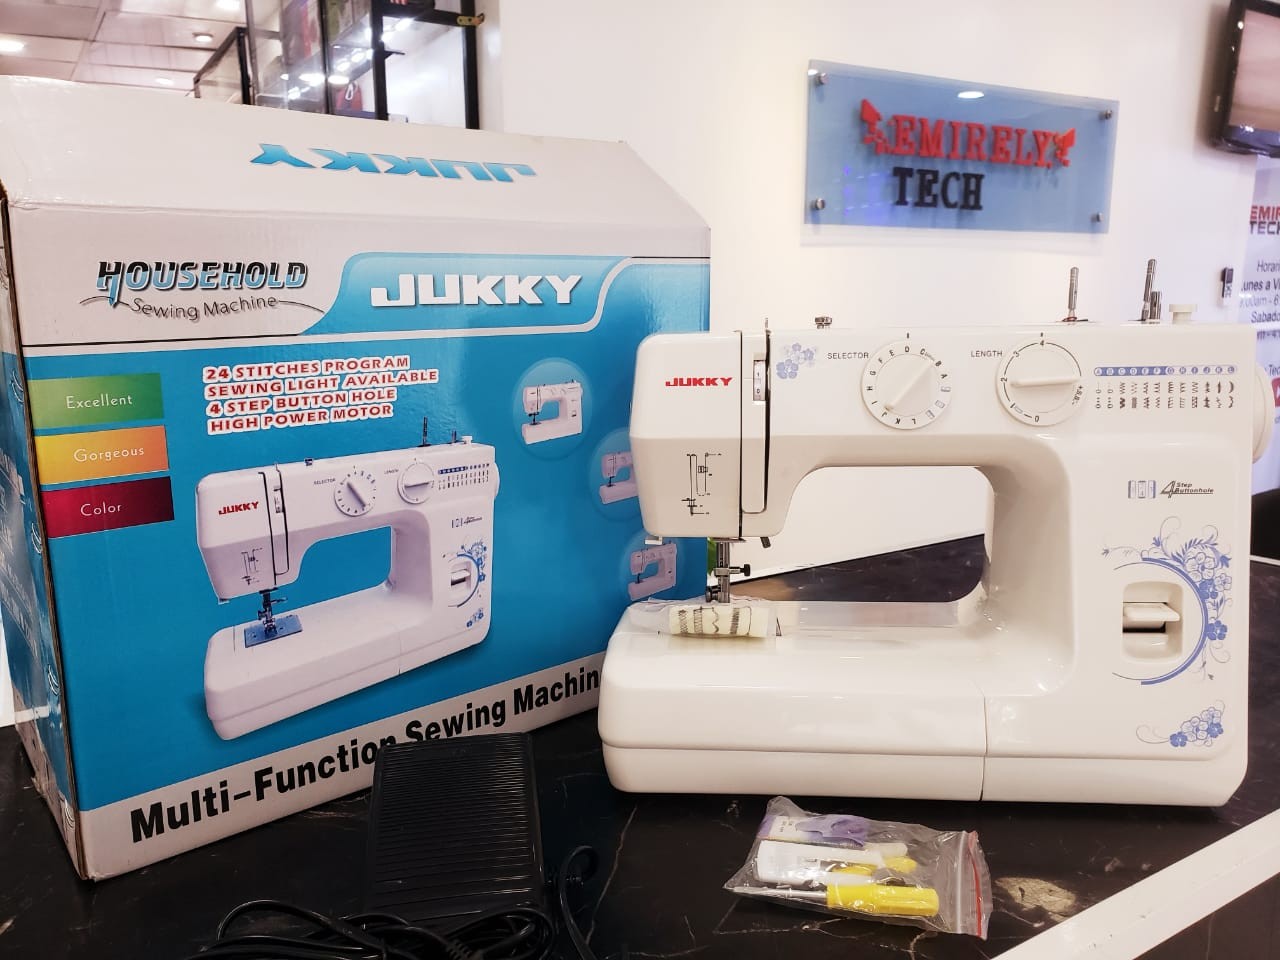 equipos profesionales - Maquina de coser Electrica multifuncional profesional JUKKY FH6224 8